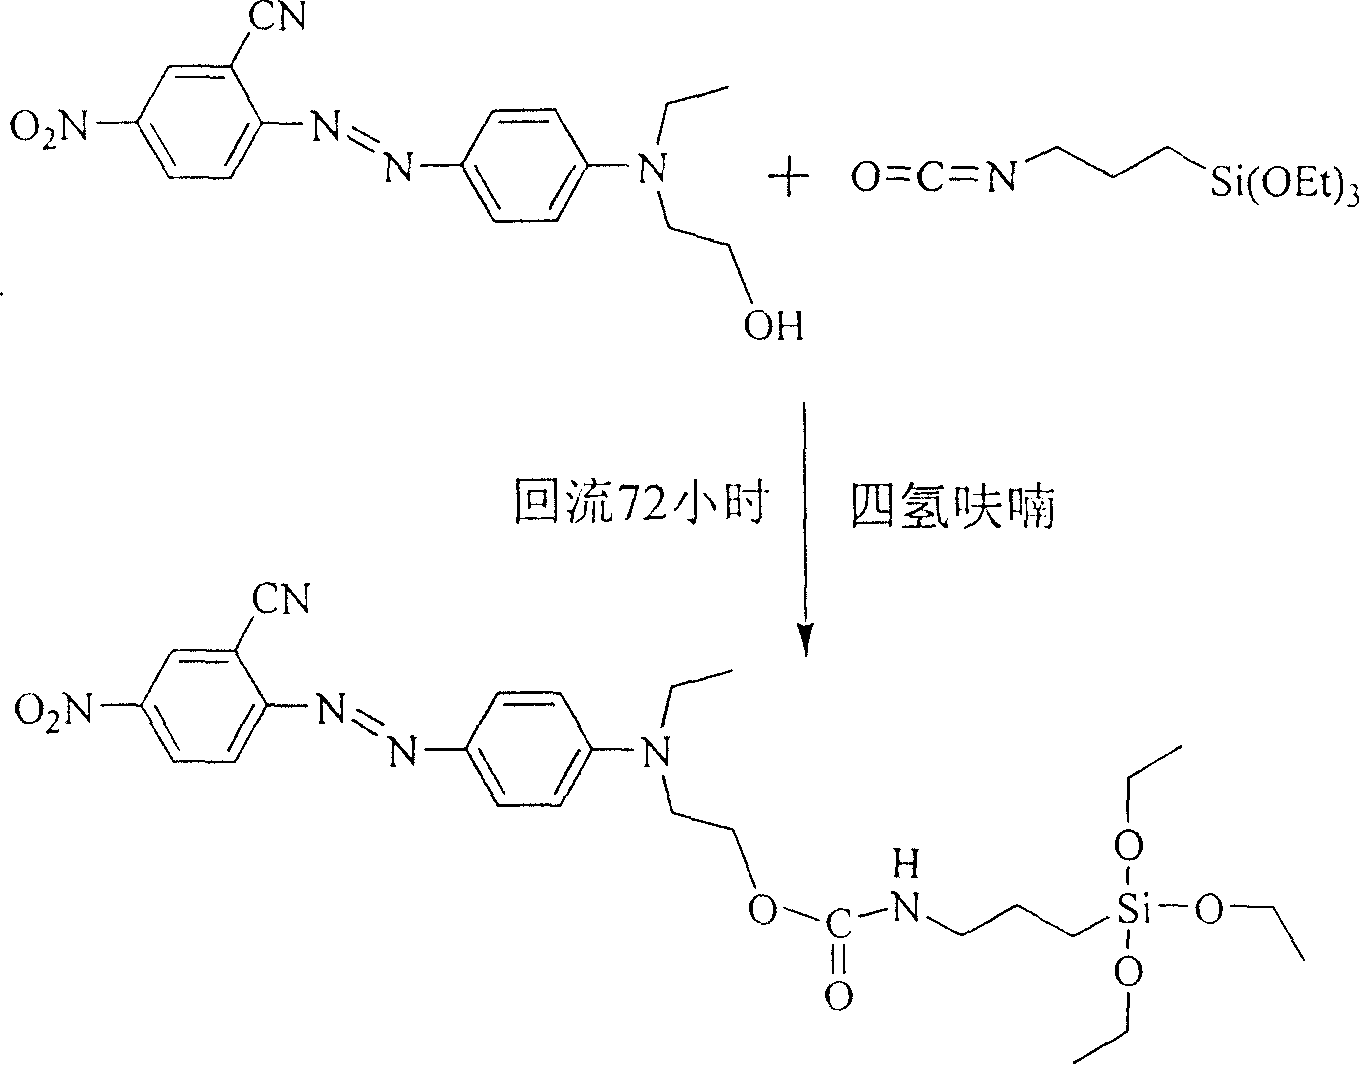 Silioxane precursor containing azobenzene dye and its synthesis method